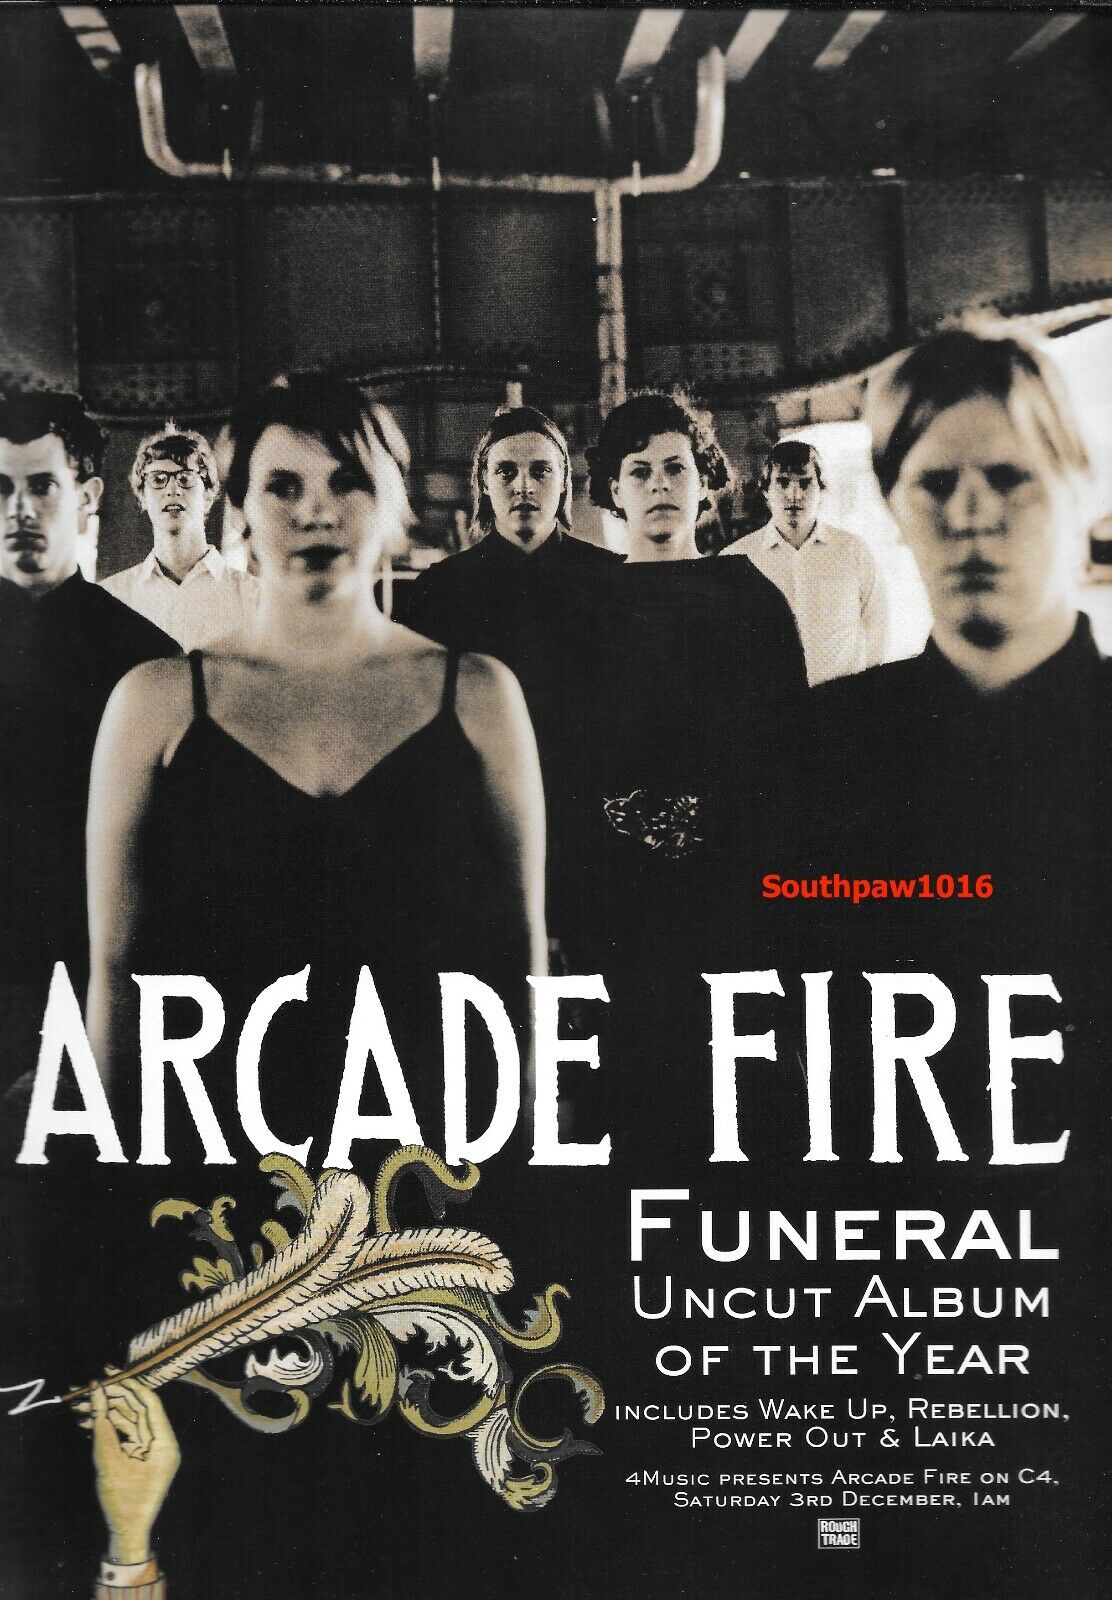 1989 Original Arcade Fire "funeral" Album Of The Year  Promo Print Ad